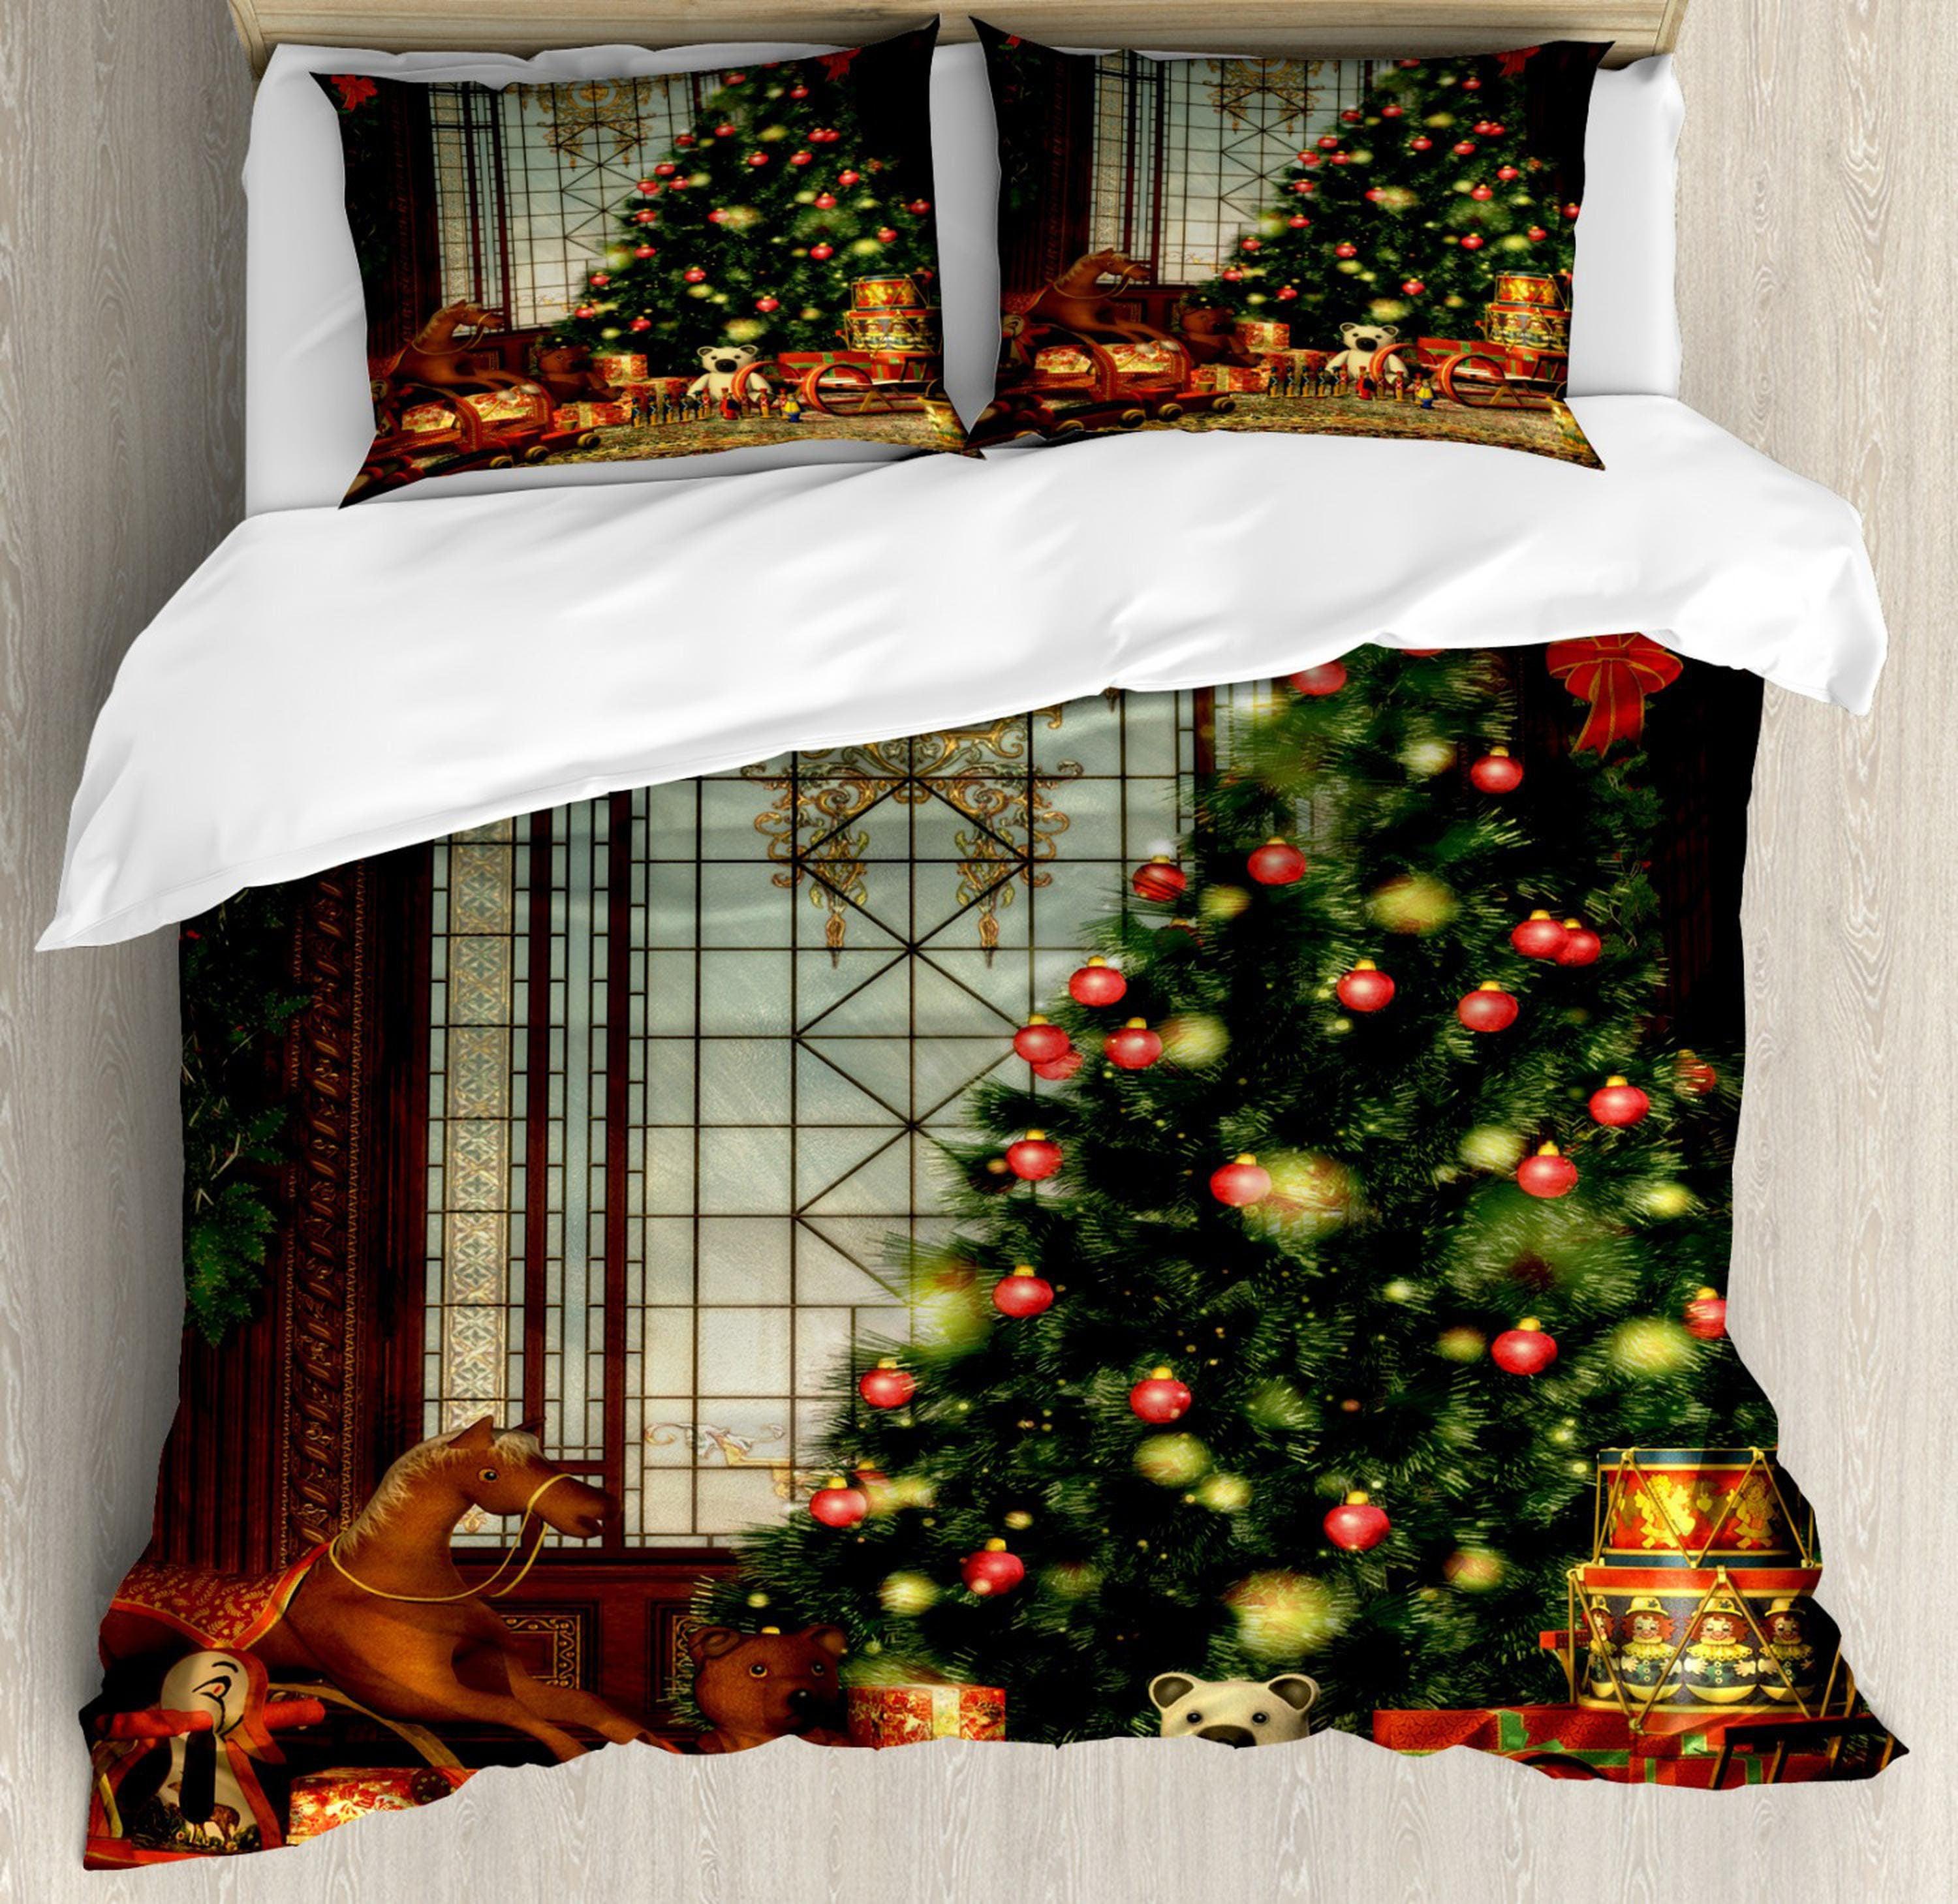 daintyduvet Christmas tree bedding & pillowcase holiday gift duvet cover king queen full twin toddler bedding baby Christmas farmhouse decor